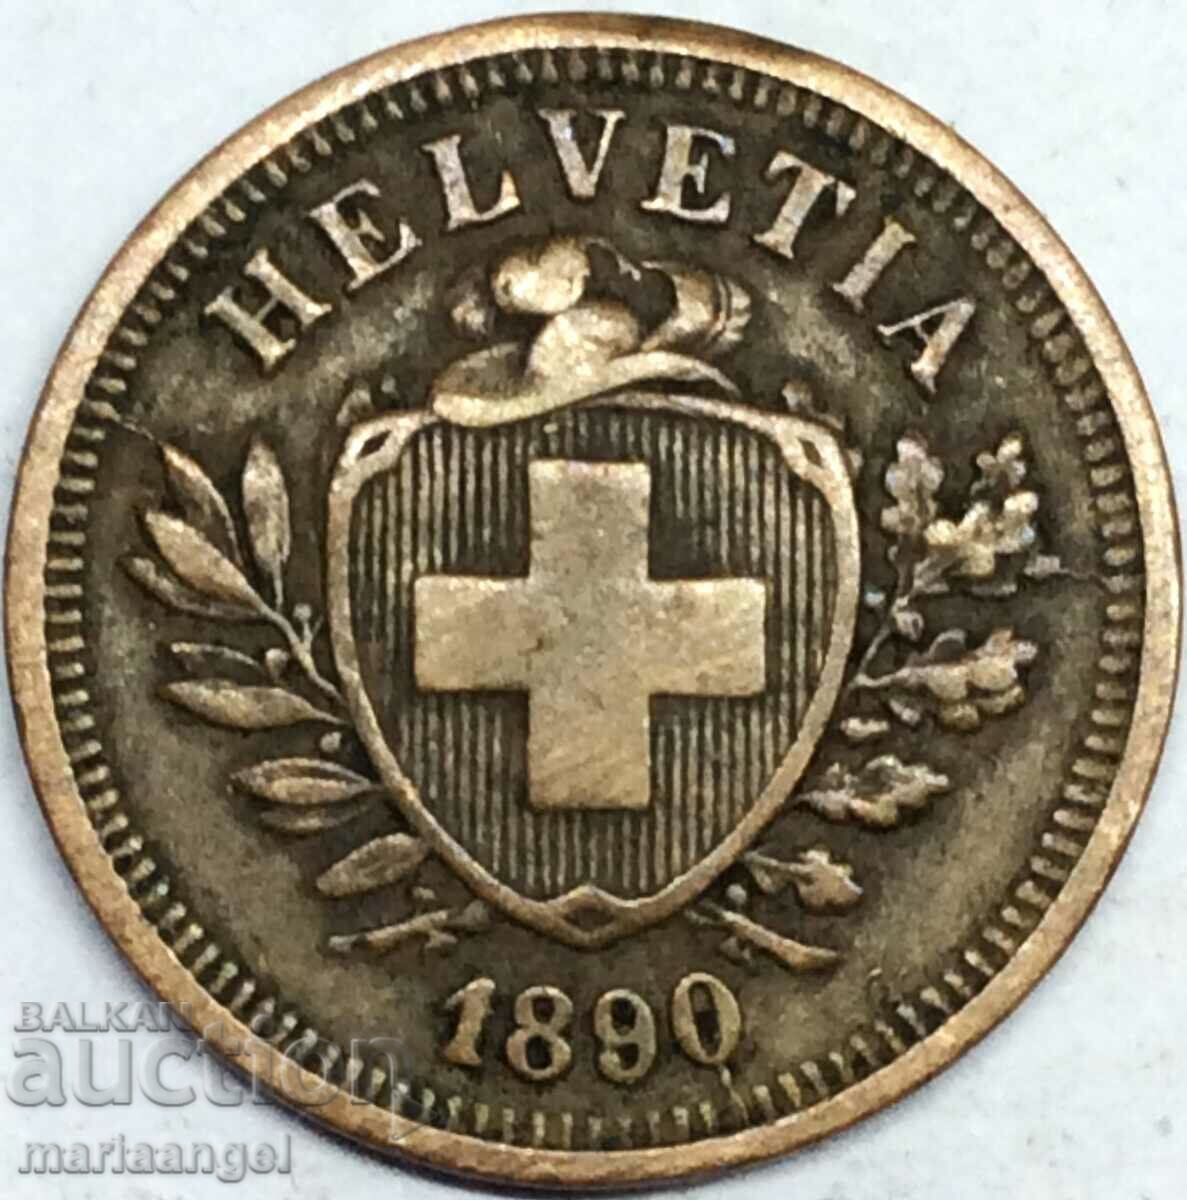 1 rapenne 1890 Elveția B - Canton Berna bronz - rar